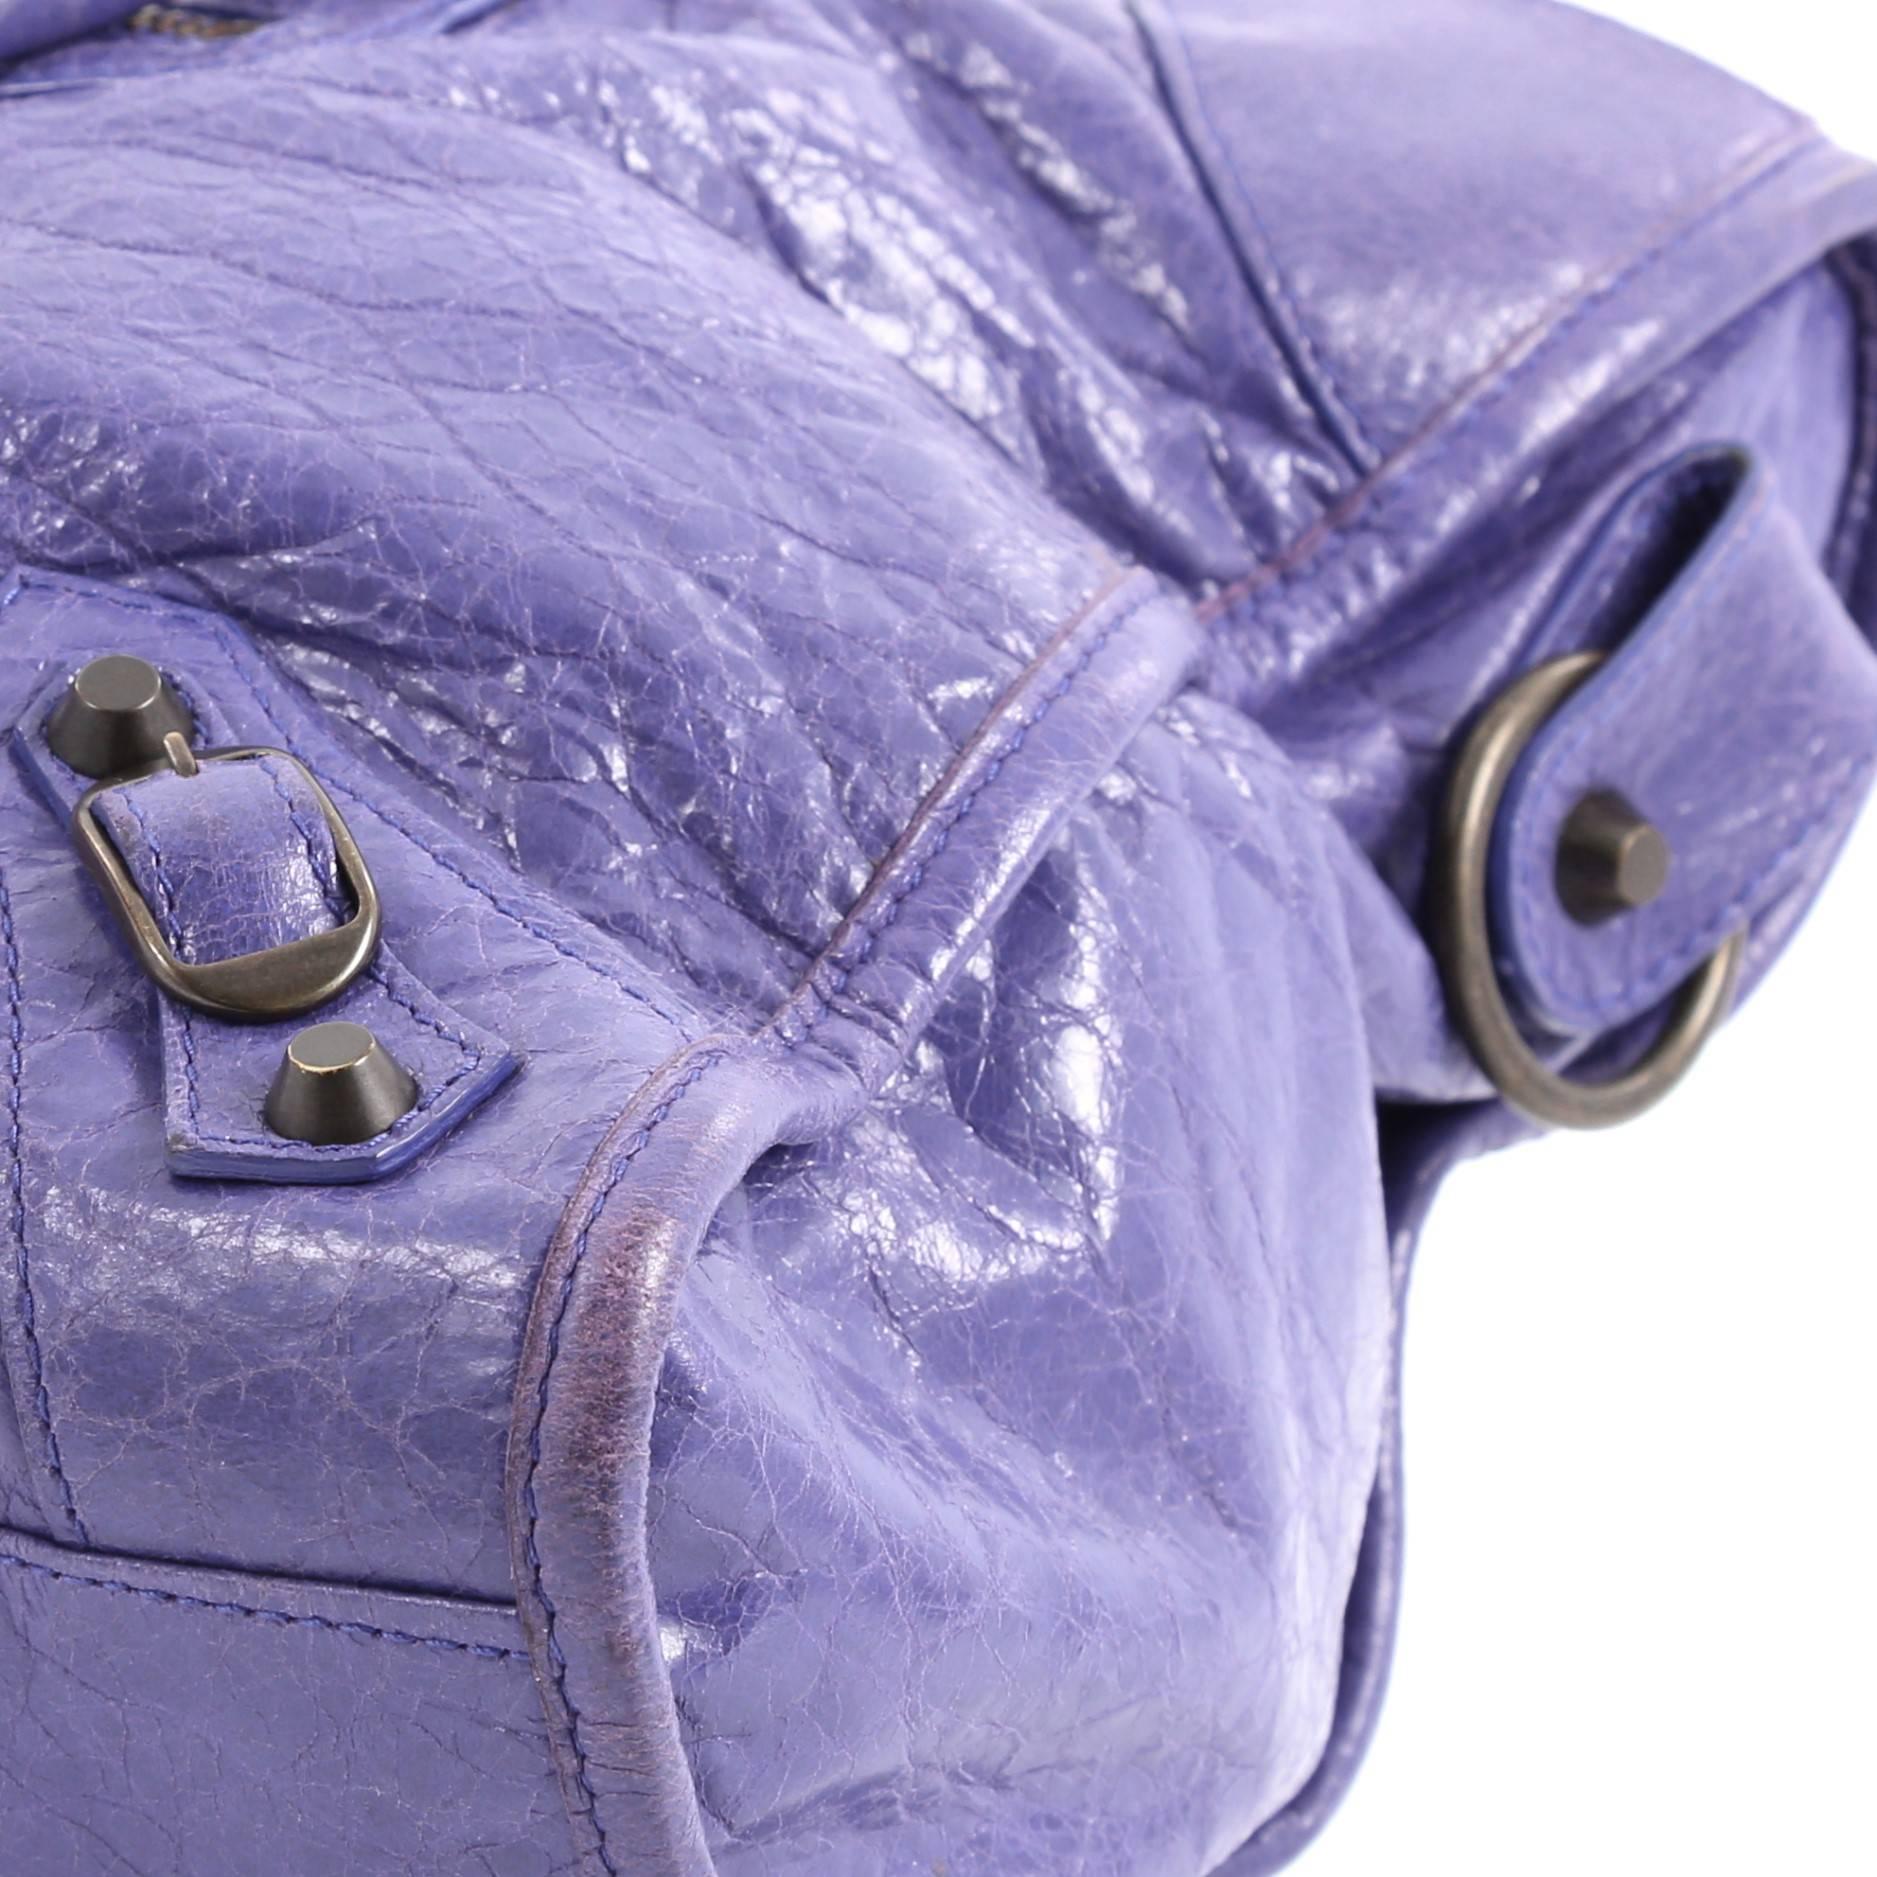 Balenciaga City Classic Studs Handbag Leather Medium 4